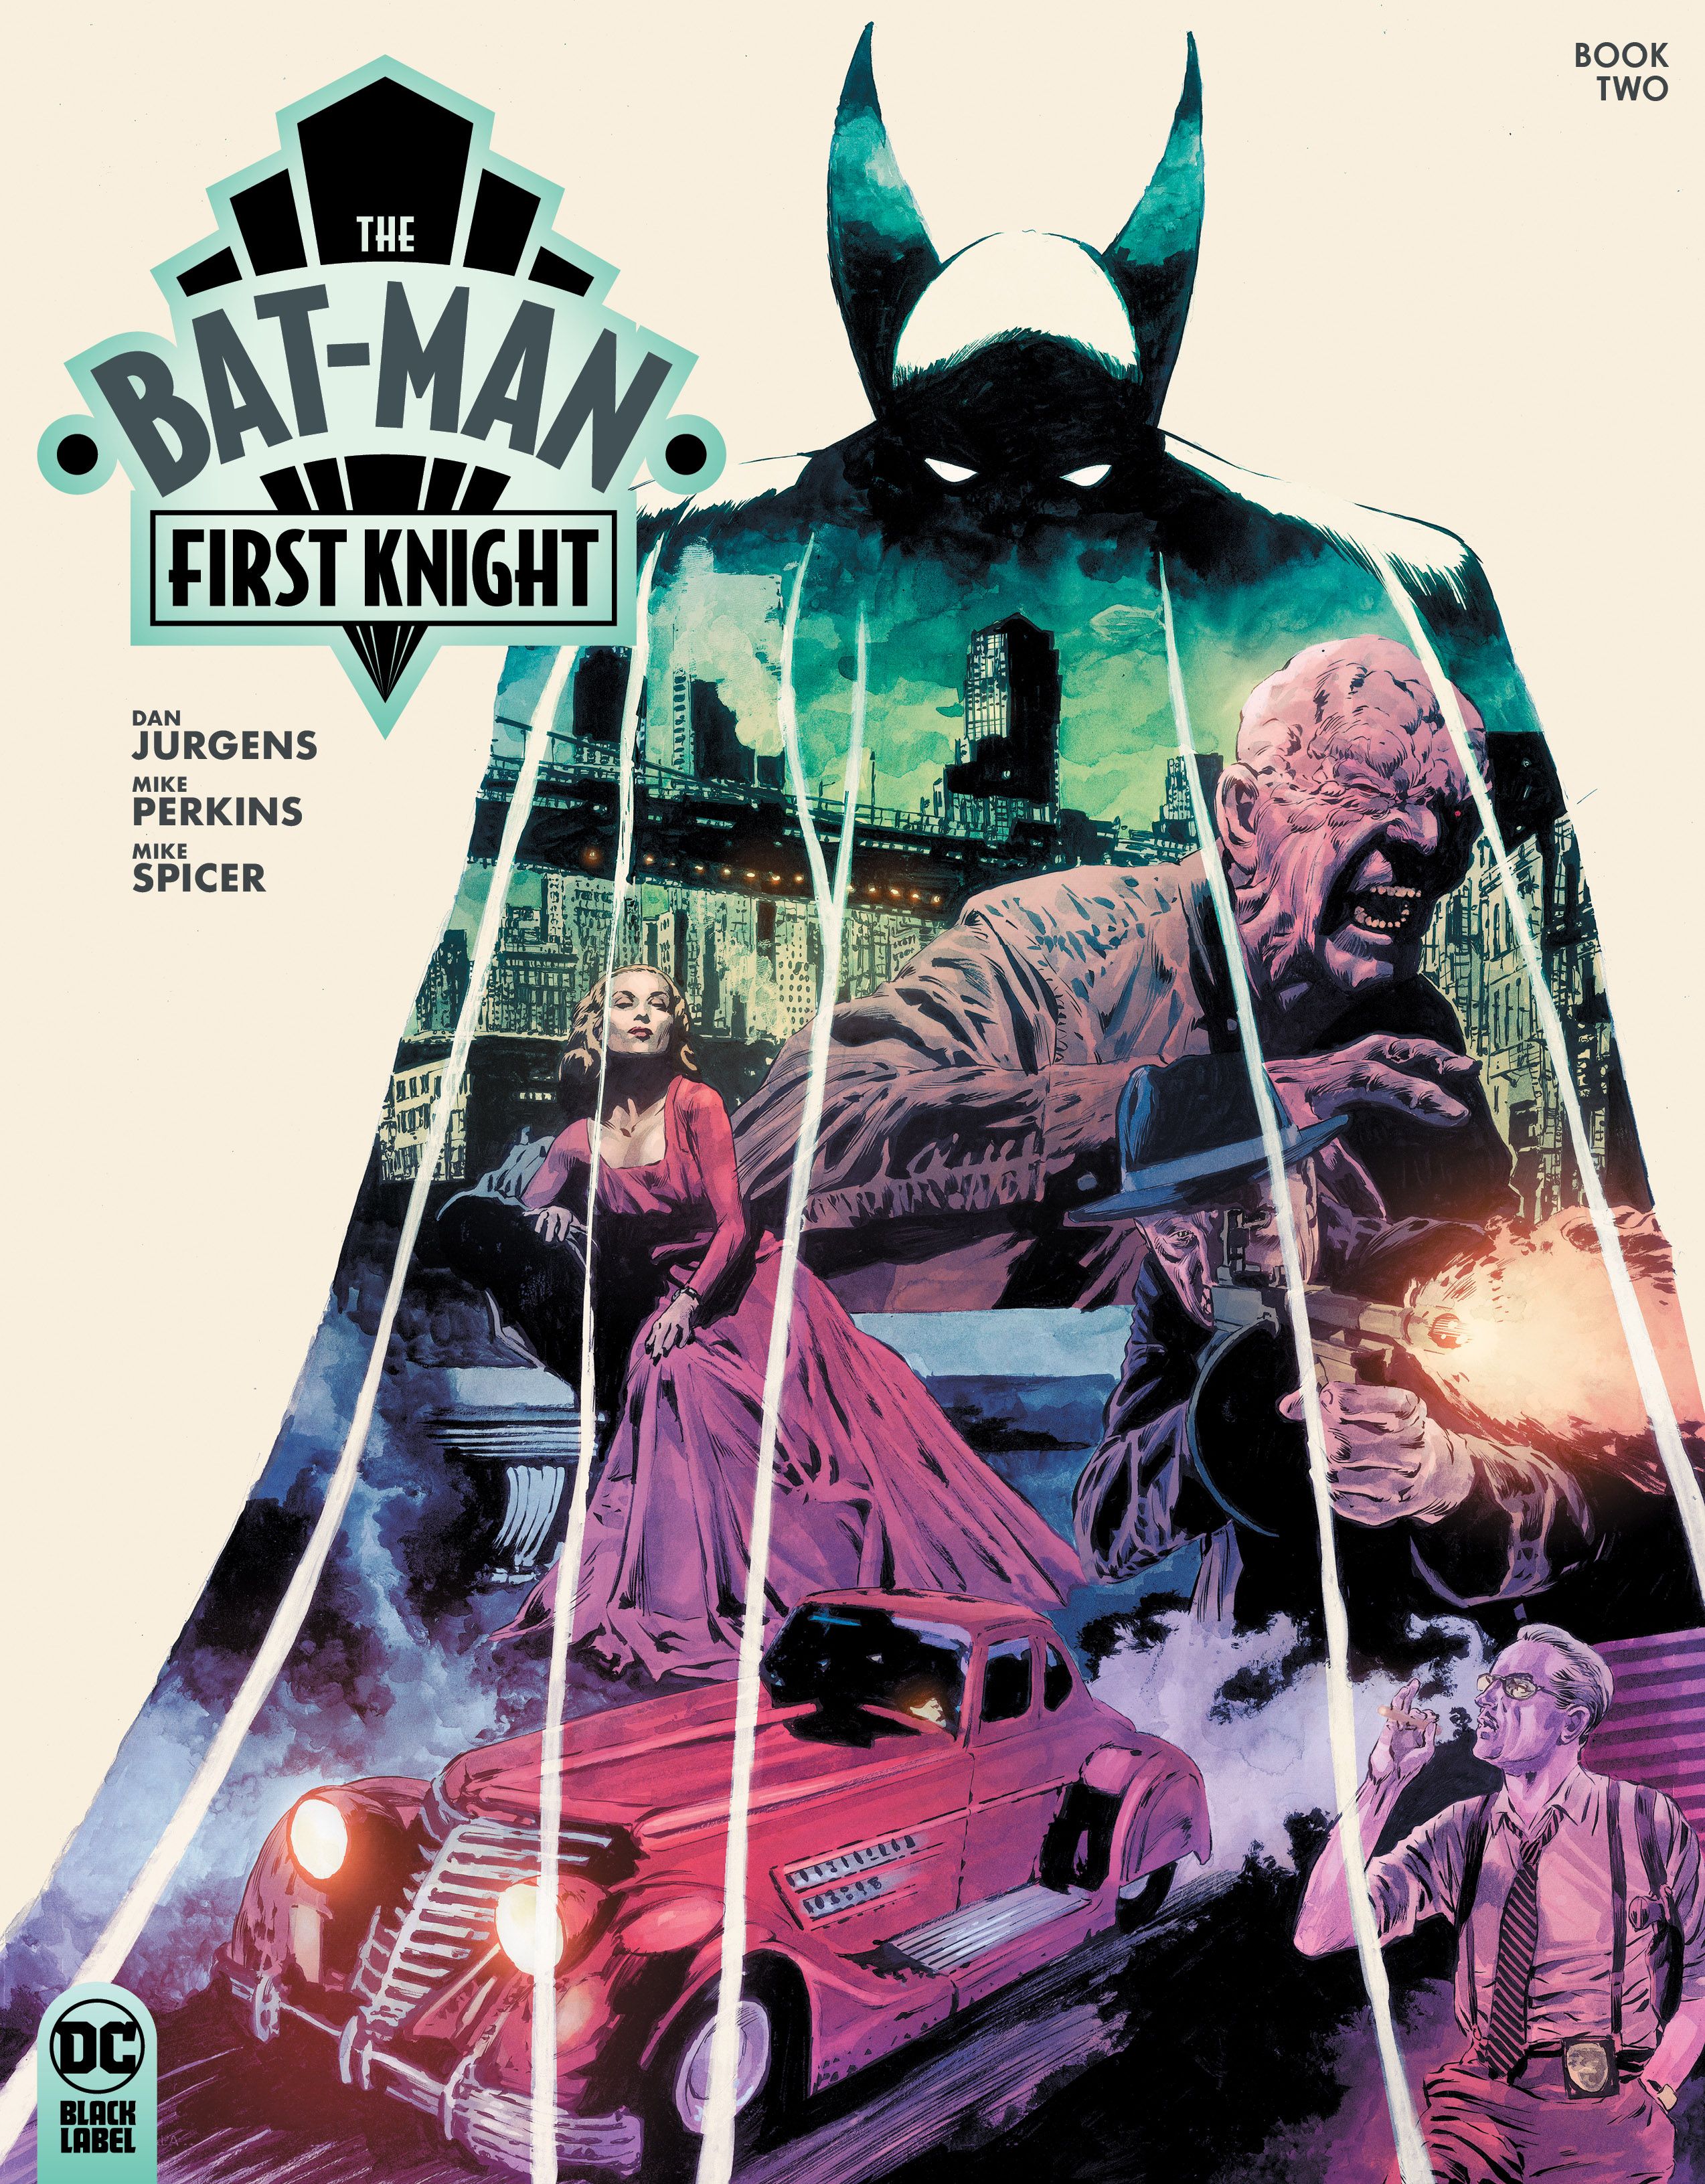 The Bat-Man: First Knight #2 Comic